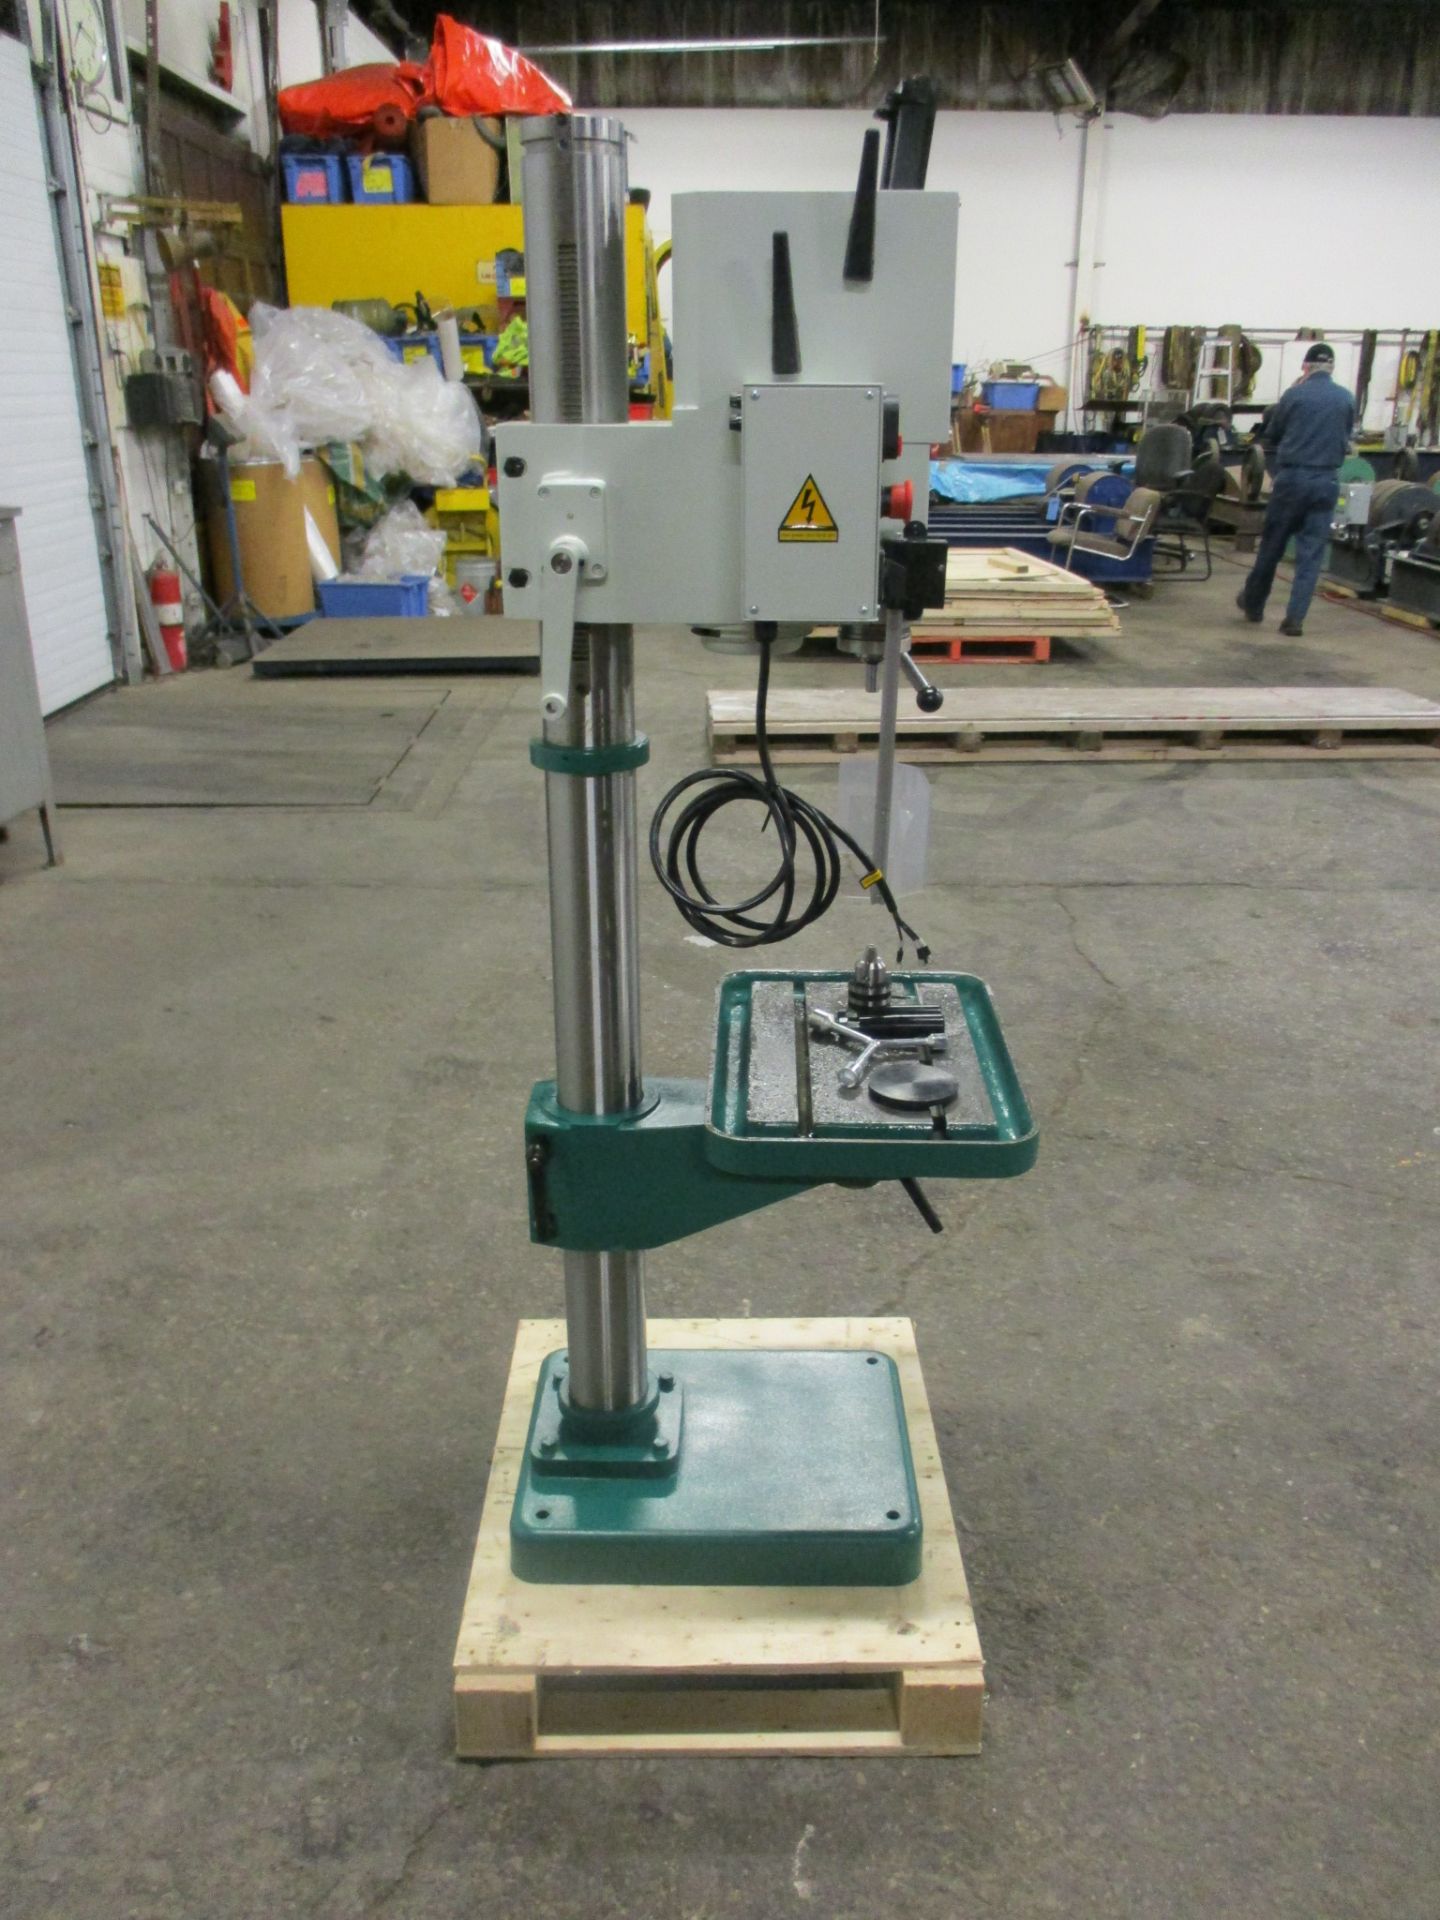 Bernardo Gear Head Drill Press - 220V 3 phase - variable speed unit 1740-3480 RPM - MINT DRILL - Image 2 of 2